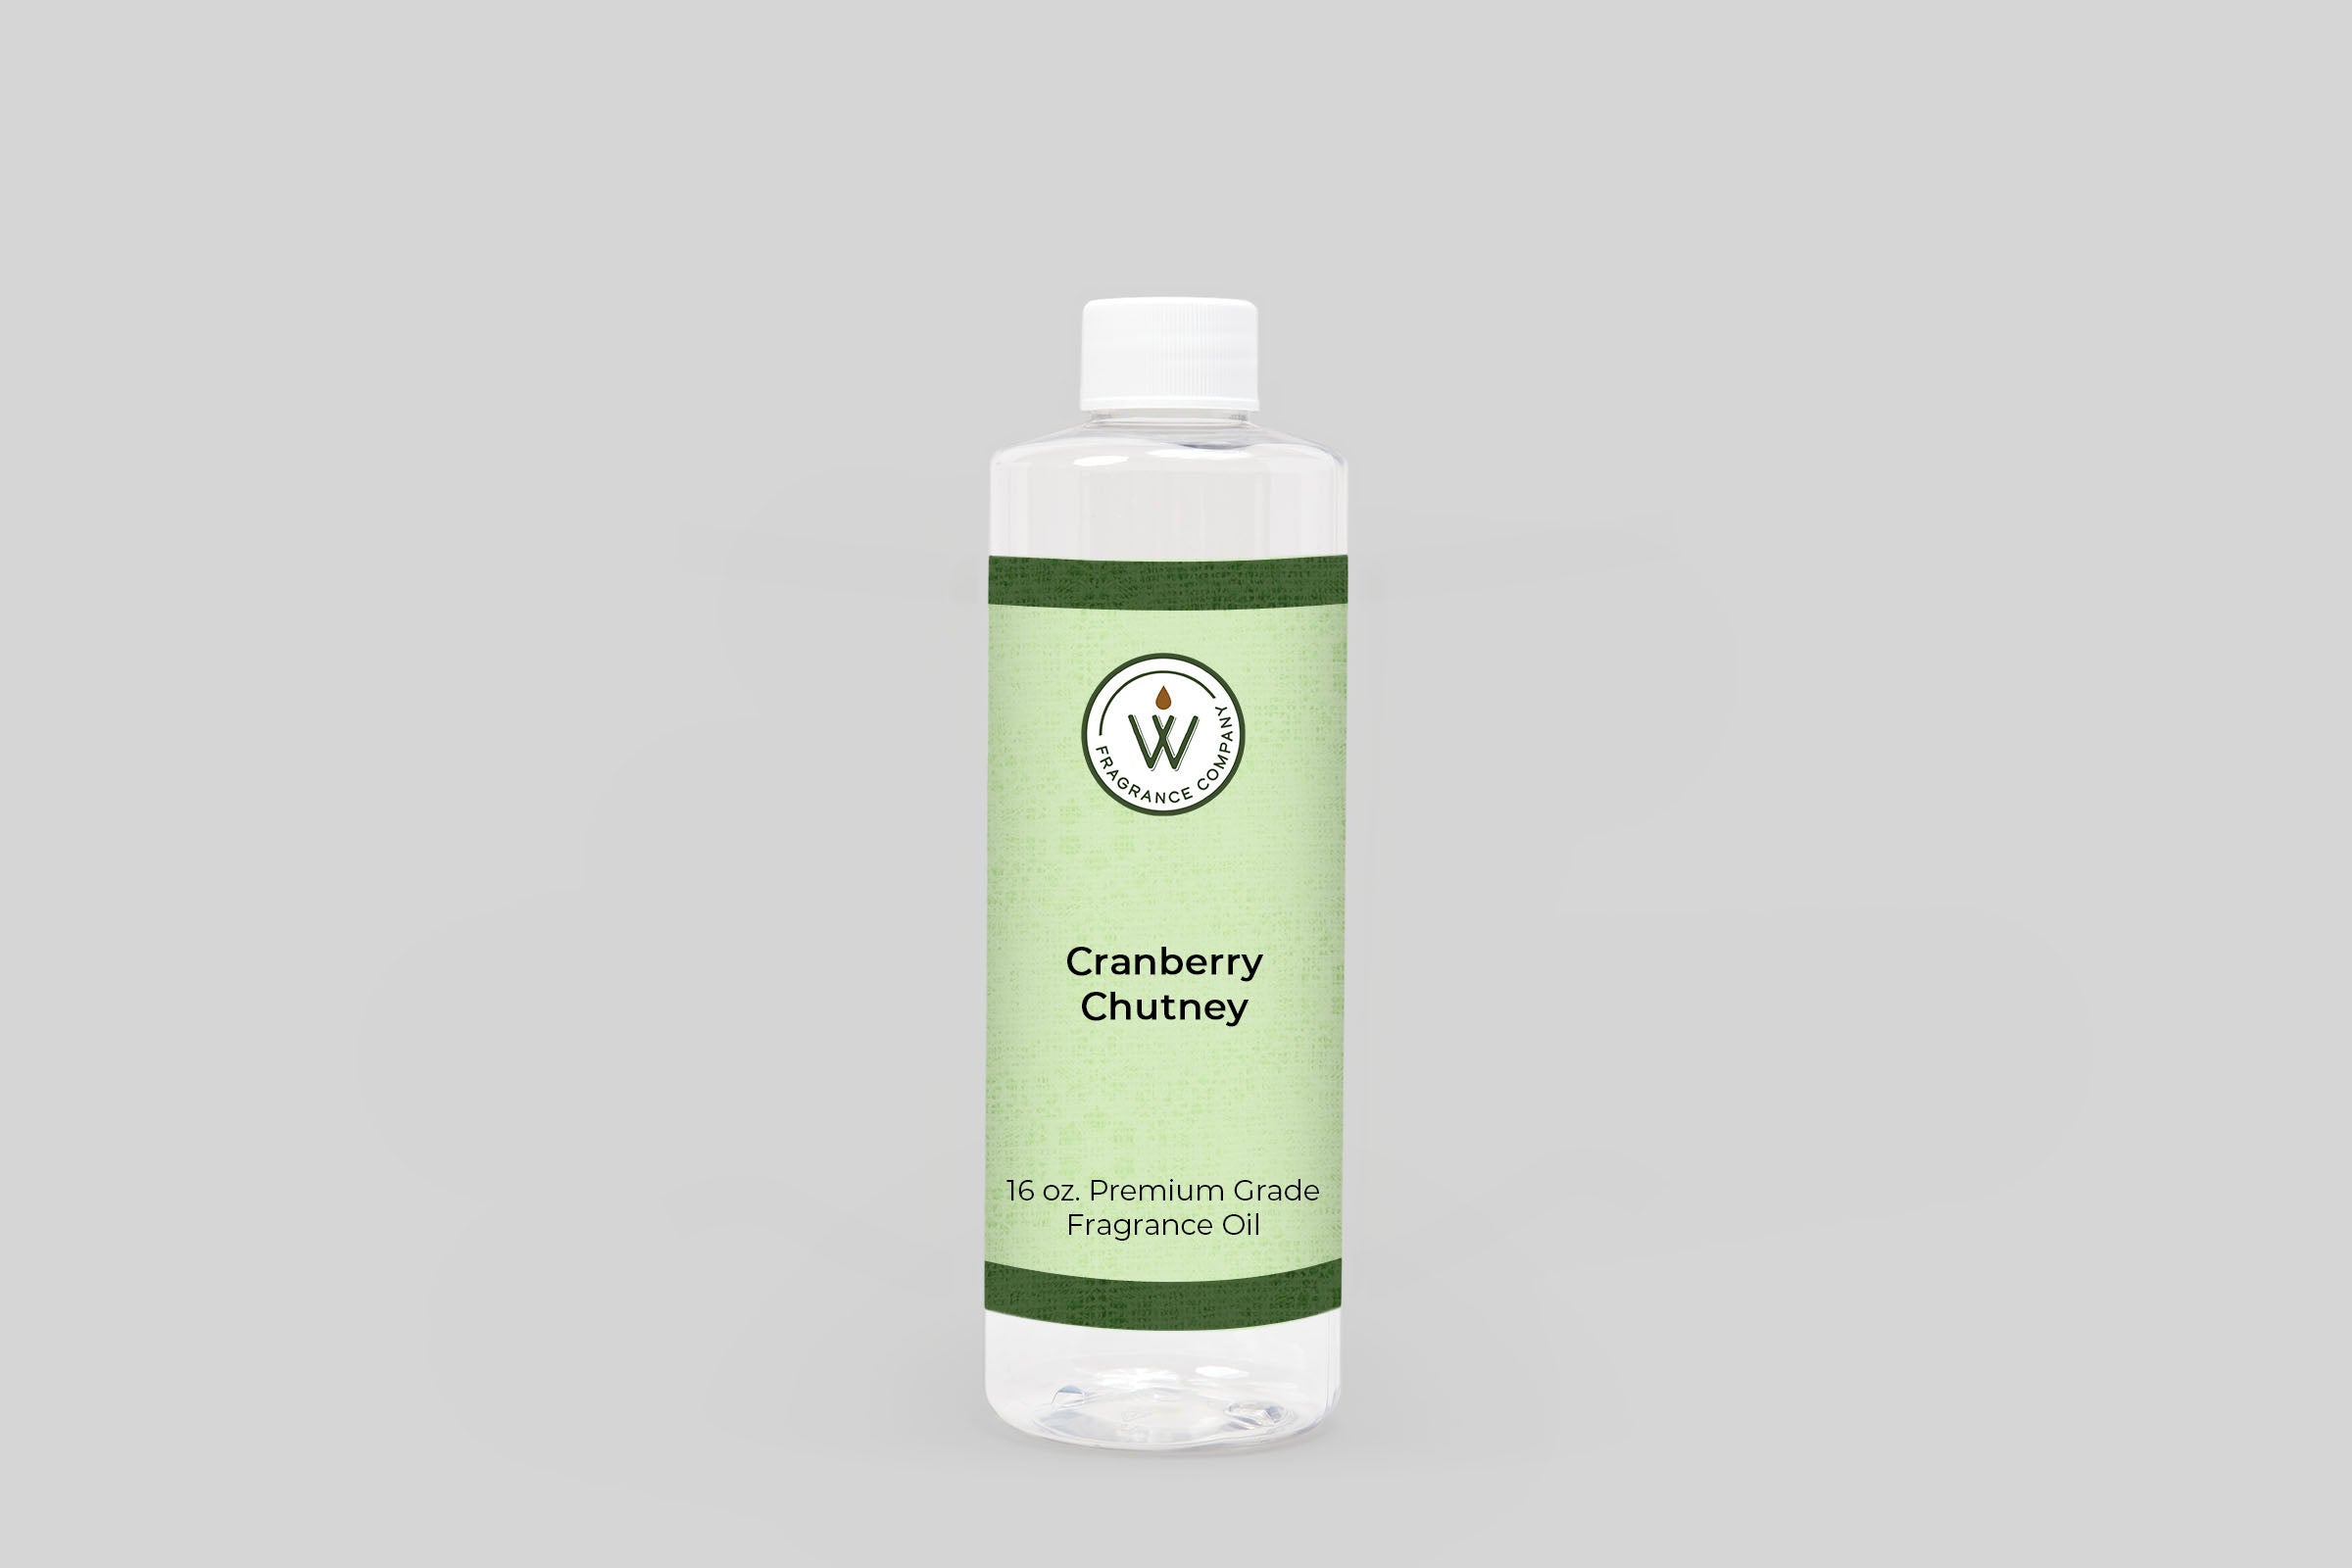 Cranberry Chutney Fragrance Oil